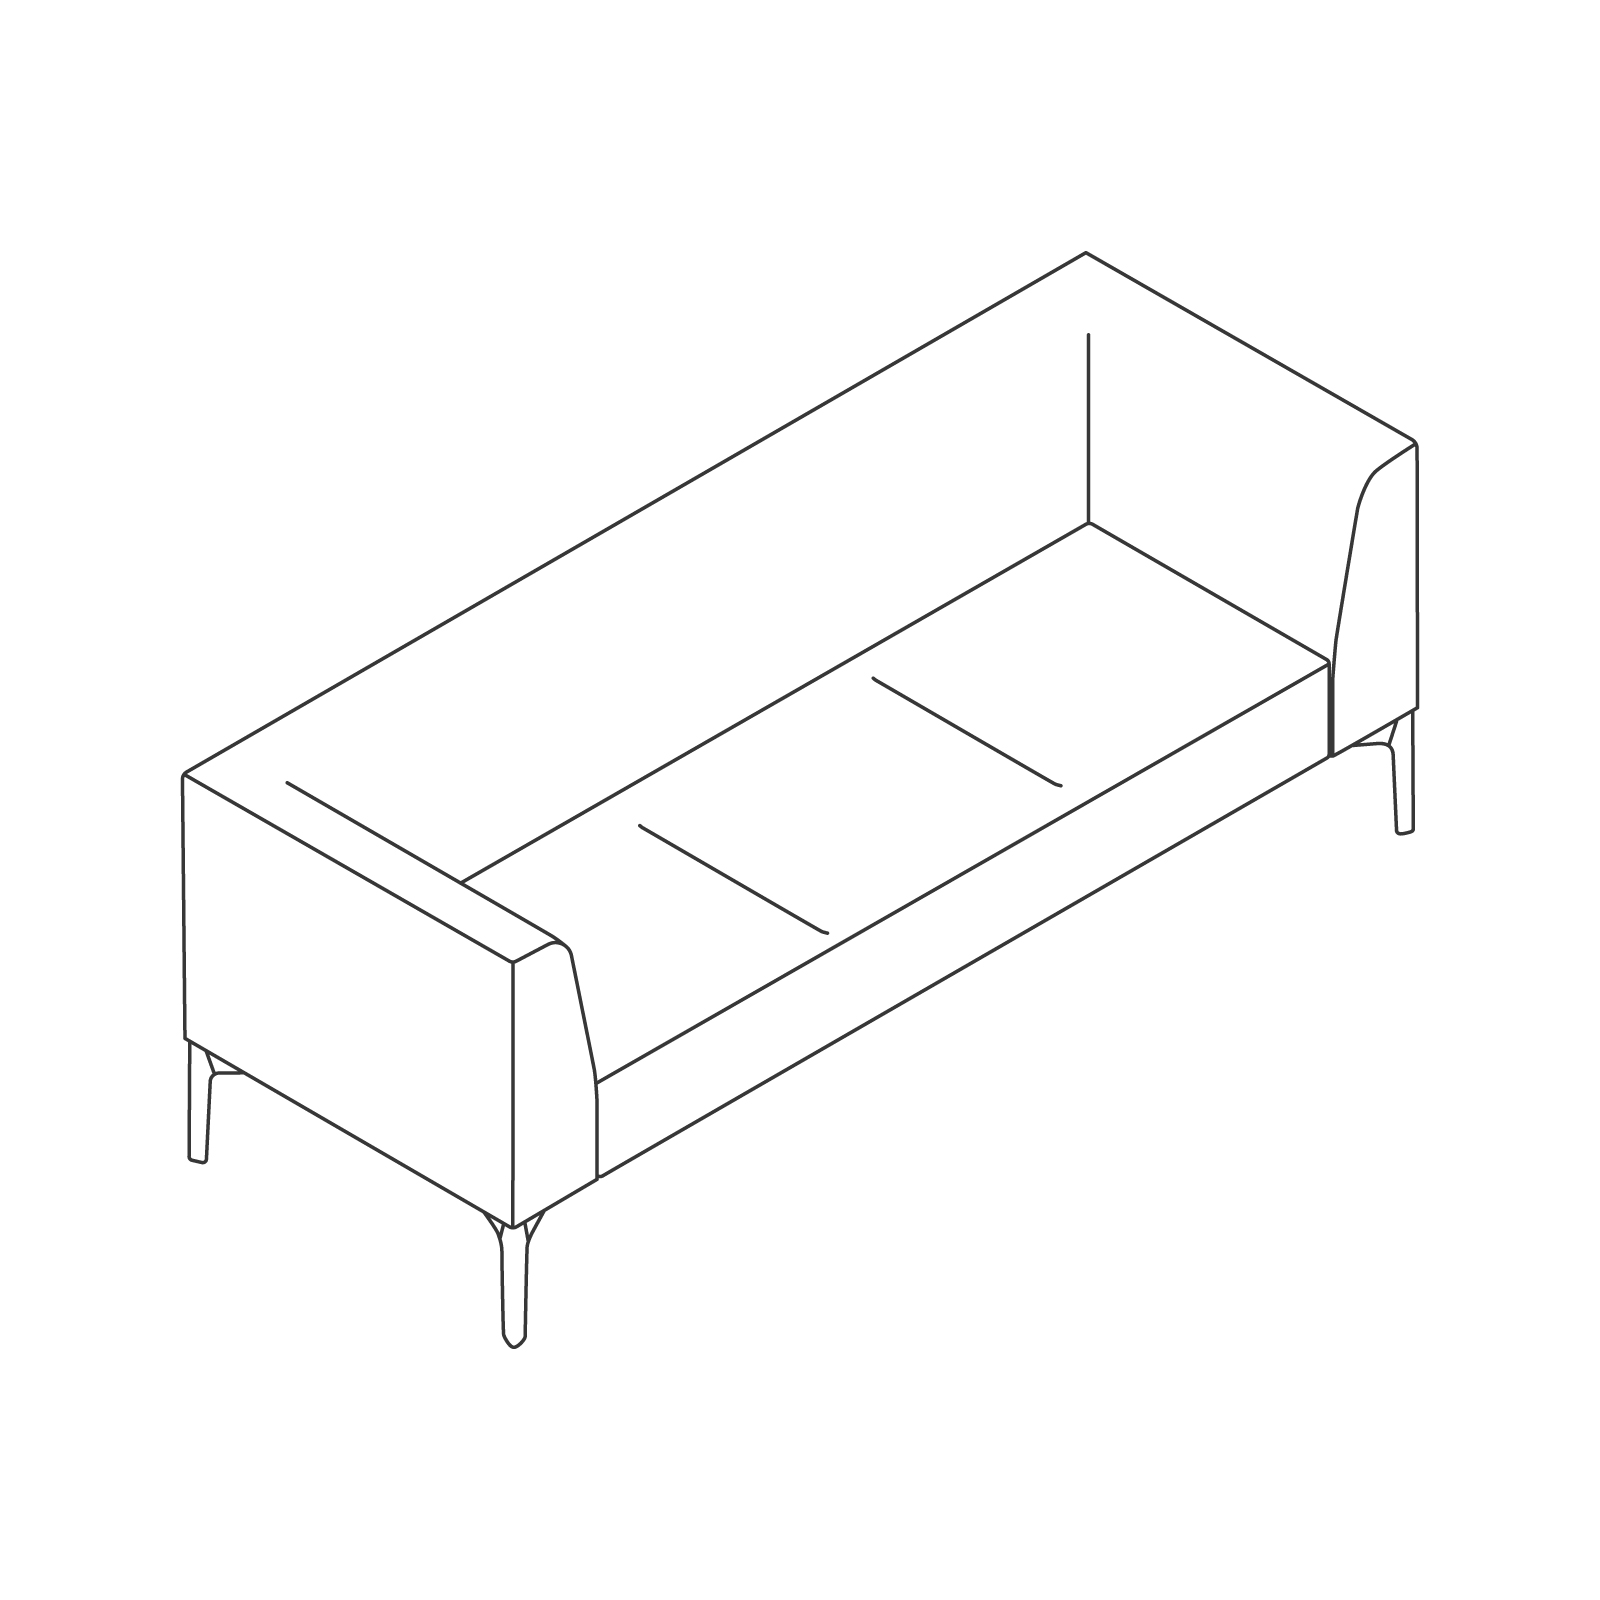 Un dibujo - Sofá Symbol – 3 asientos